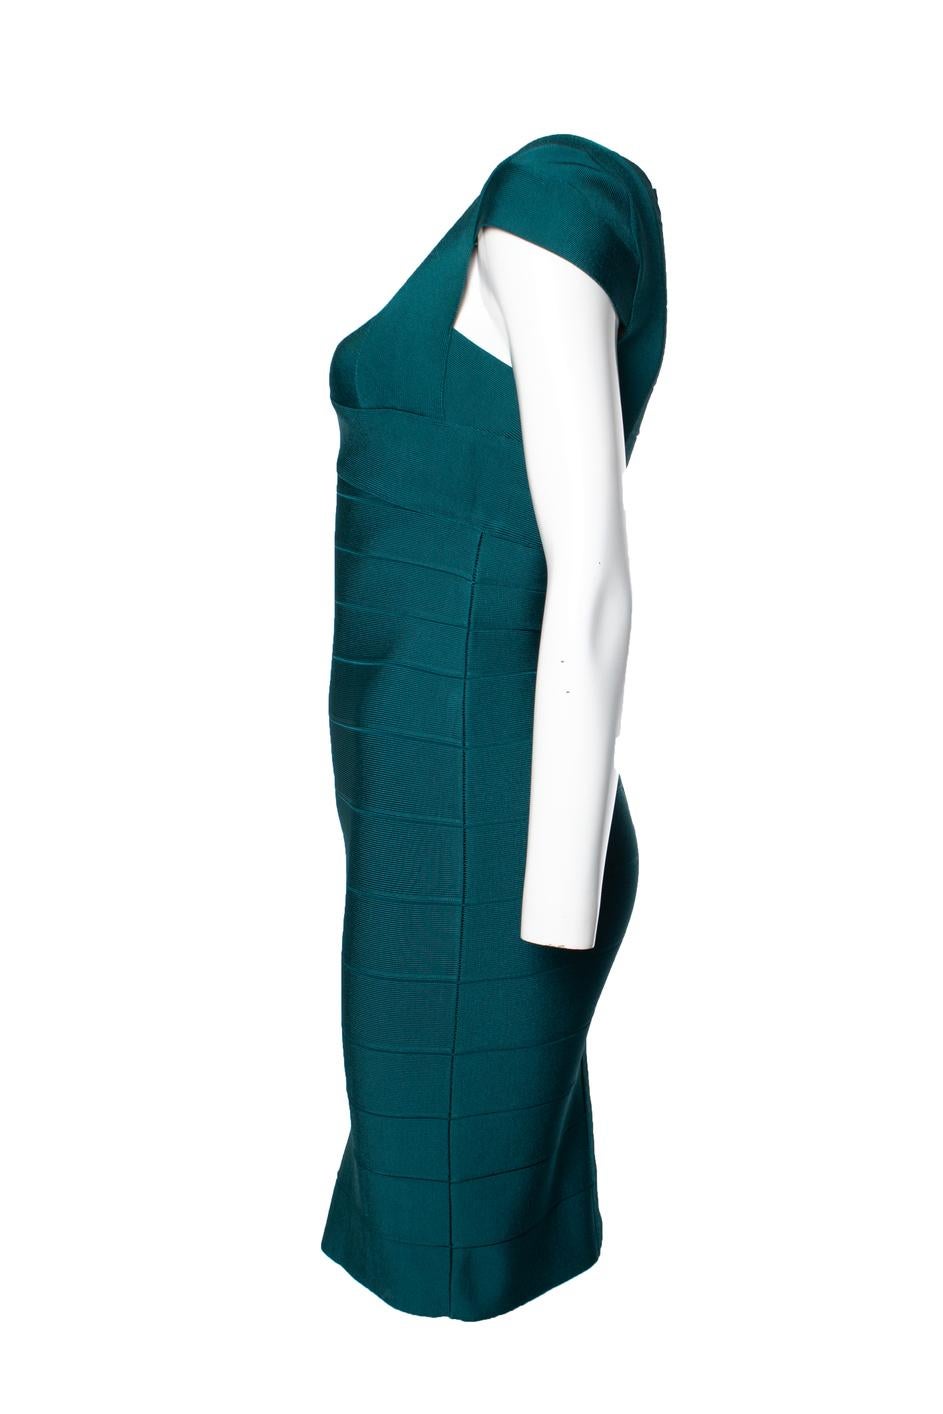 Herve Leger, Bodycon dress in green. The item is in good condition.

• CONDITION: good condition 

• SIZE: S 

• MEASUREMENTS: length 89 cm, width 39 cm, waist 29 cm, shoulder width 43 cm, sleeve length 5 cm

• MATERIAL: 90% rayon 9% nylon 1%